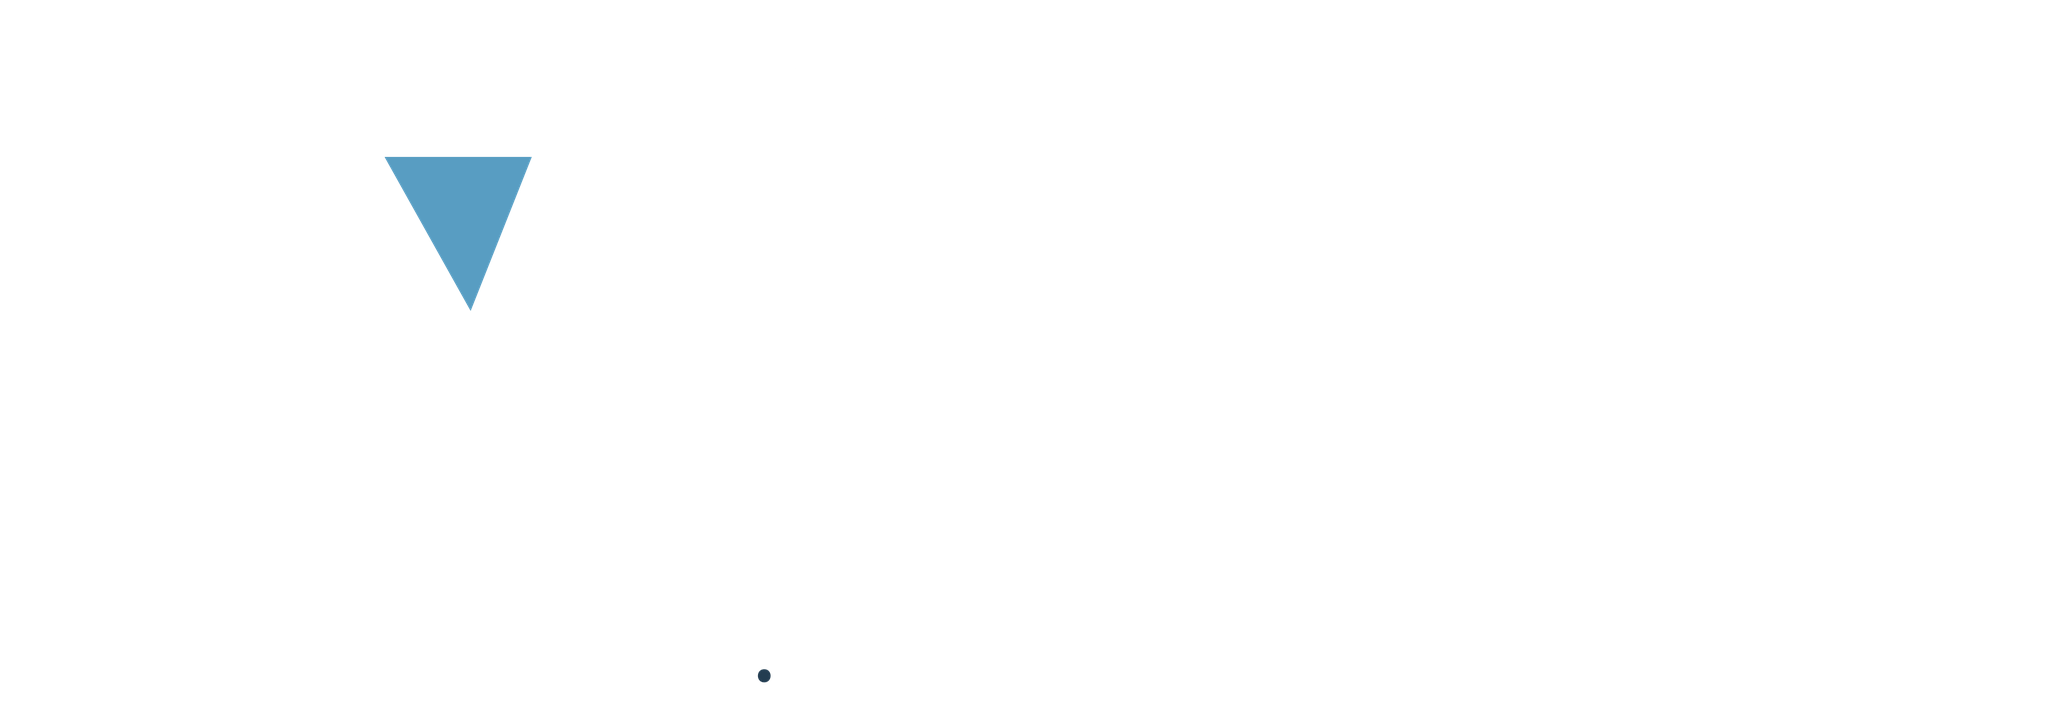 Leonardo Interactive